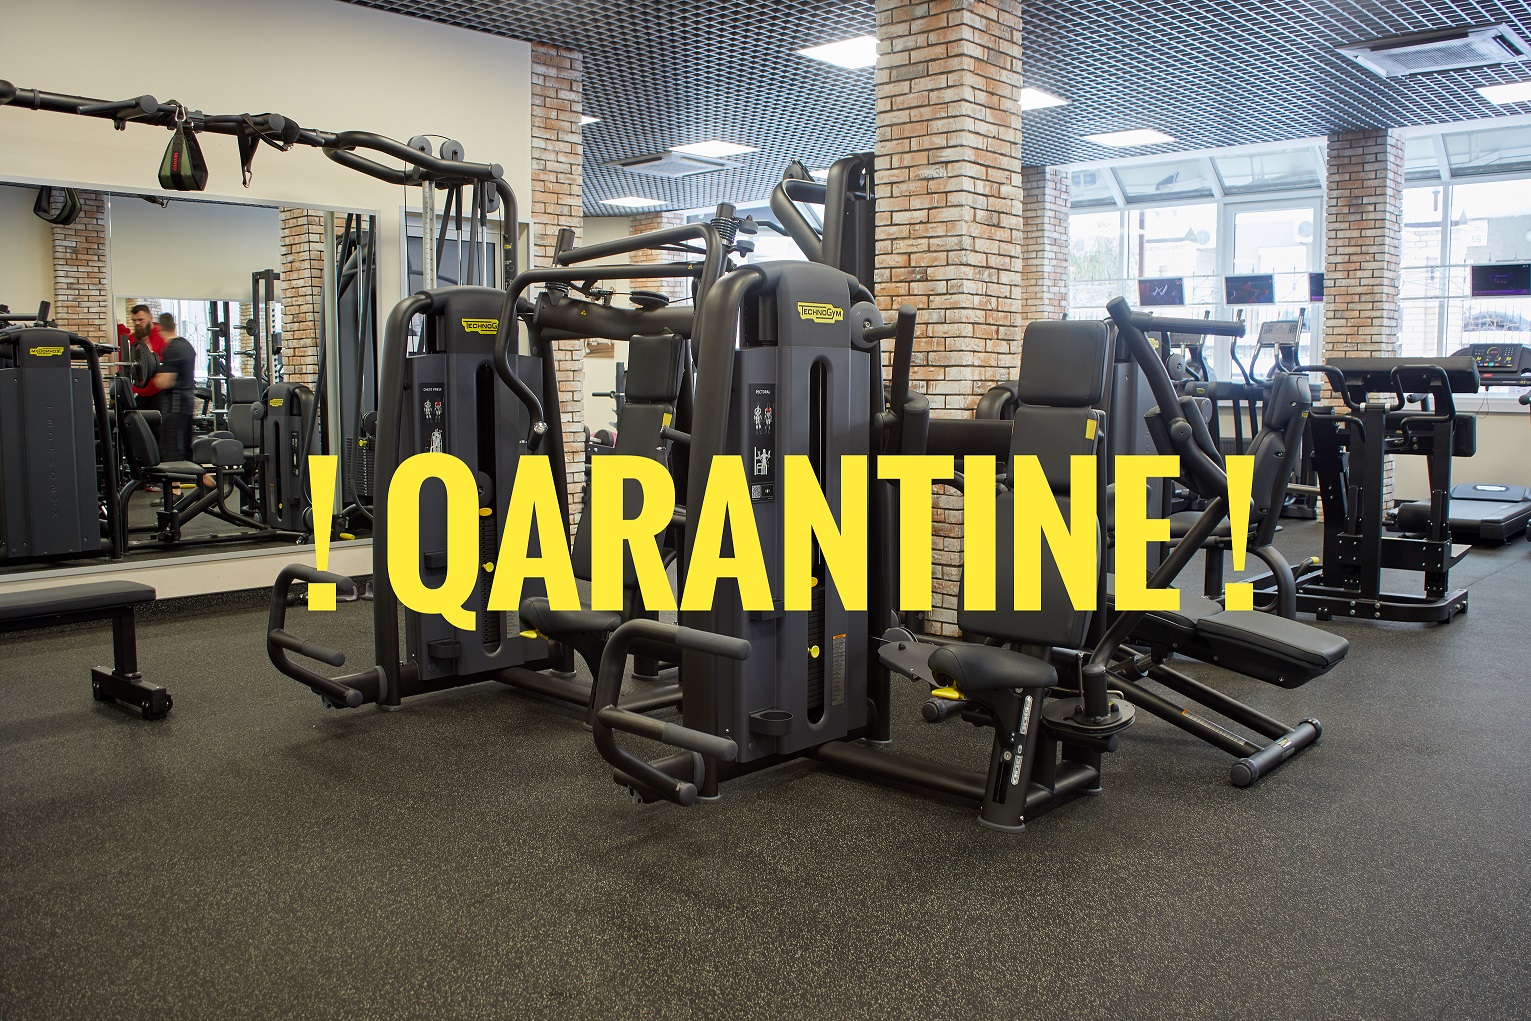 Fitness club Sport studio closed on quarantine!